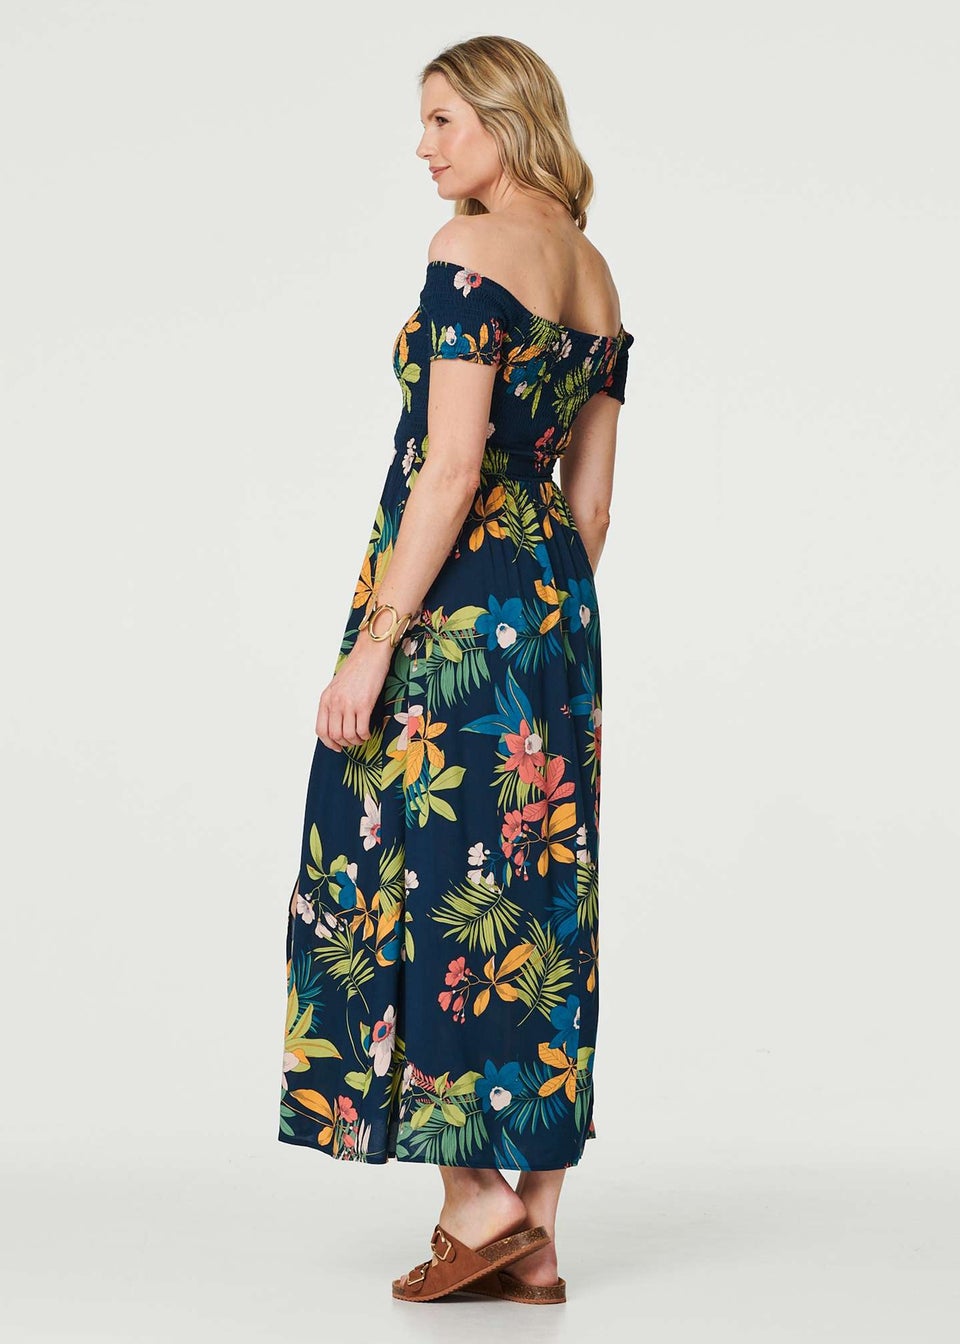 Izabel London Navy Floral Bardot Side Split Maxi Dress